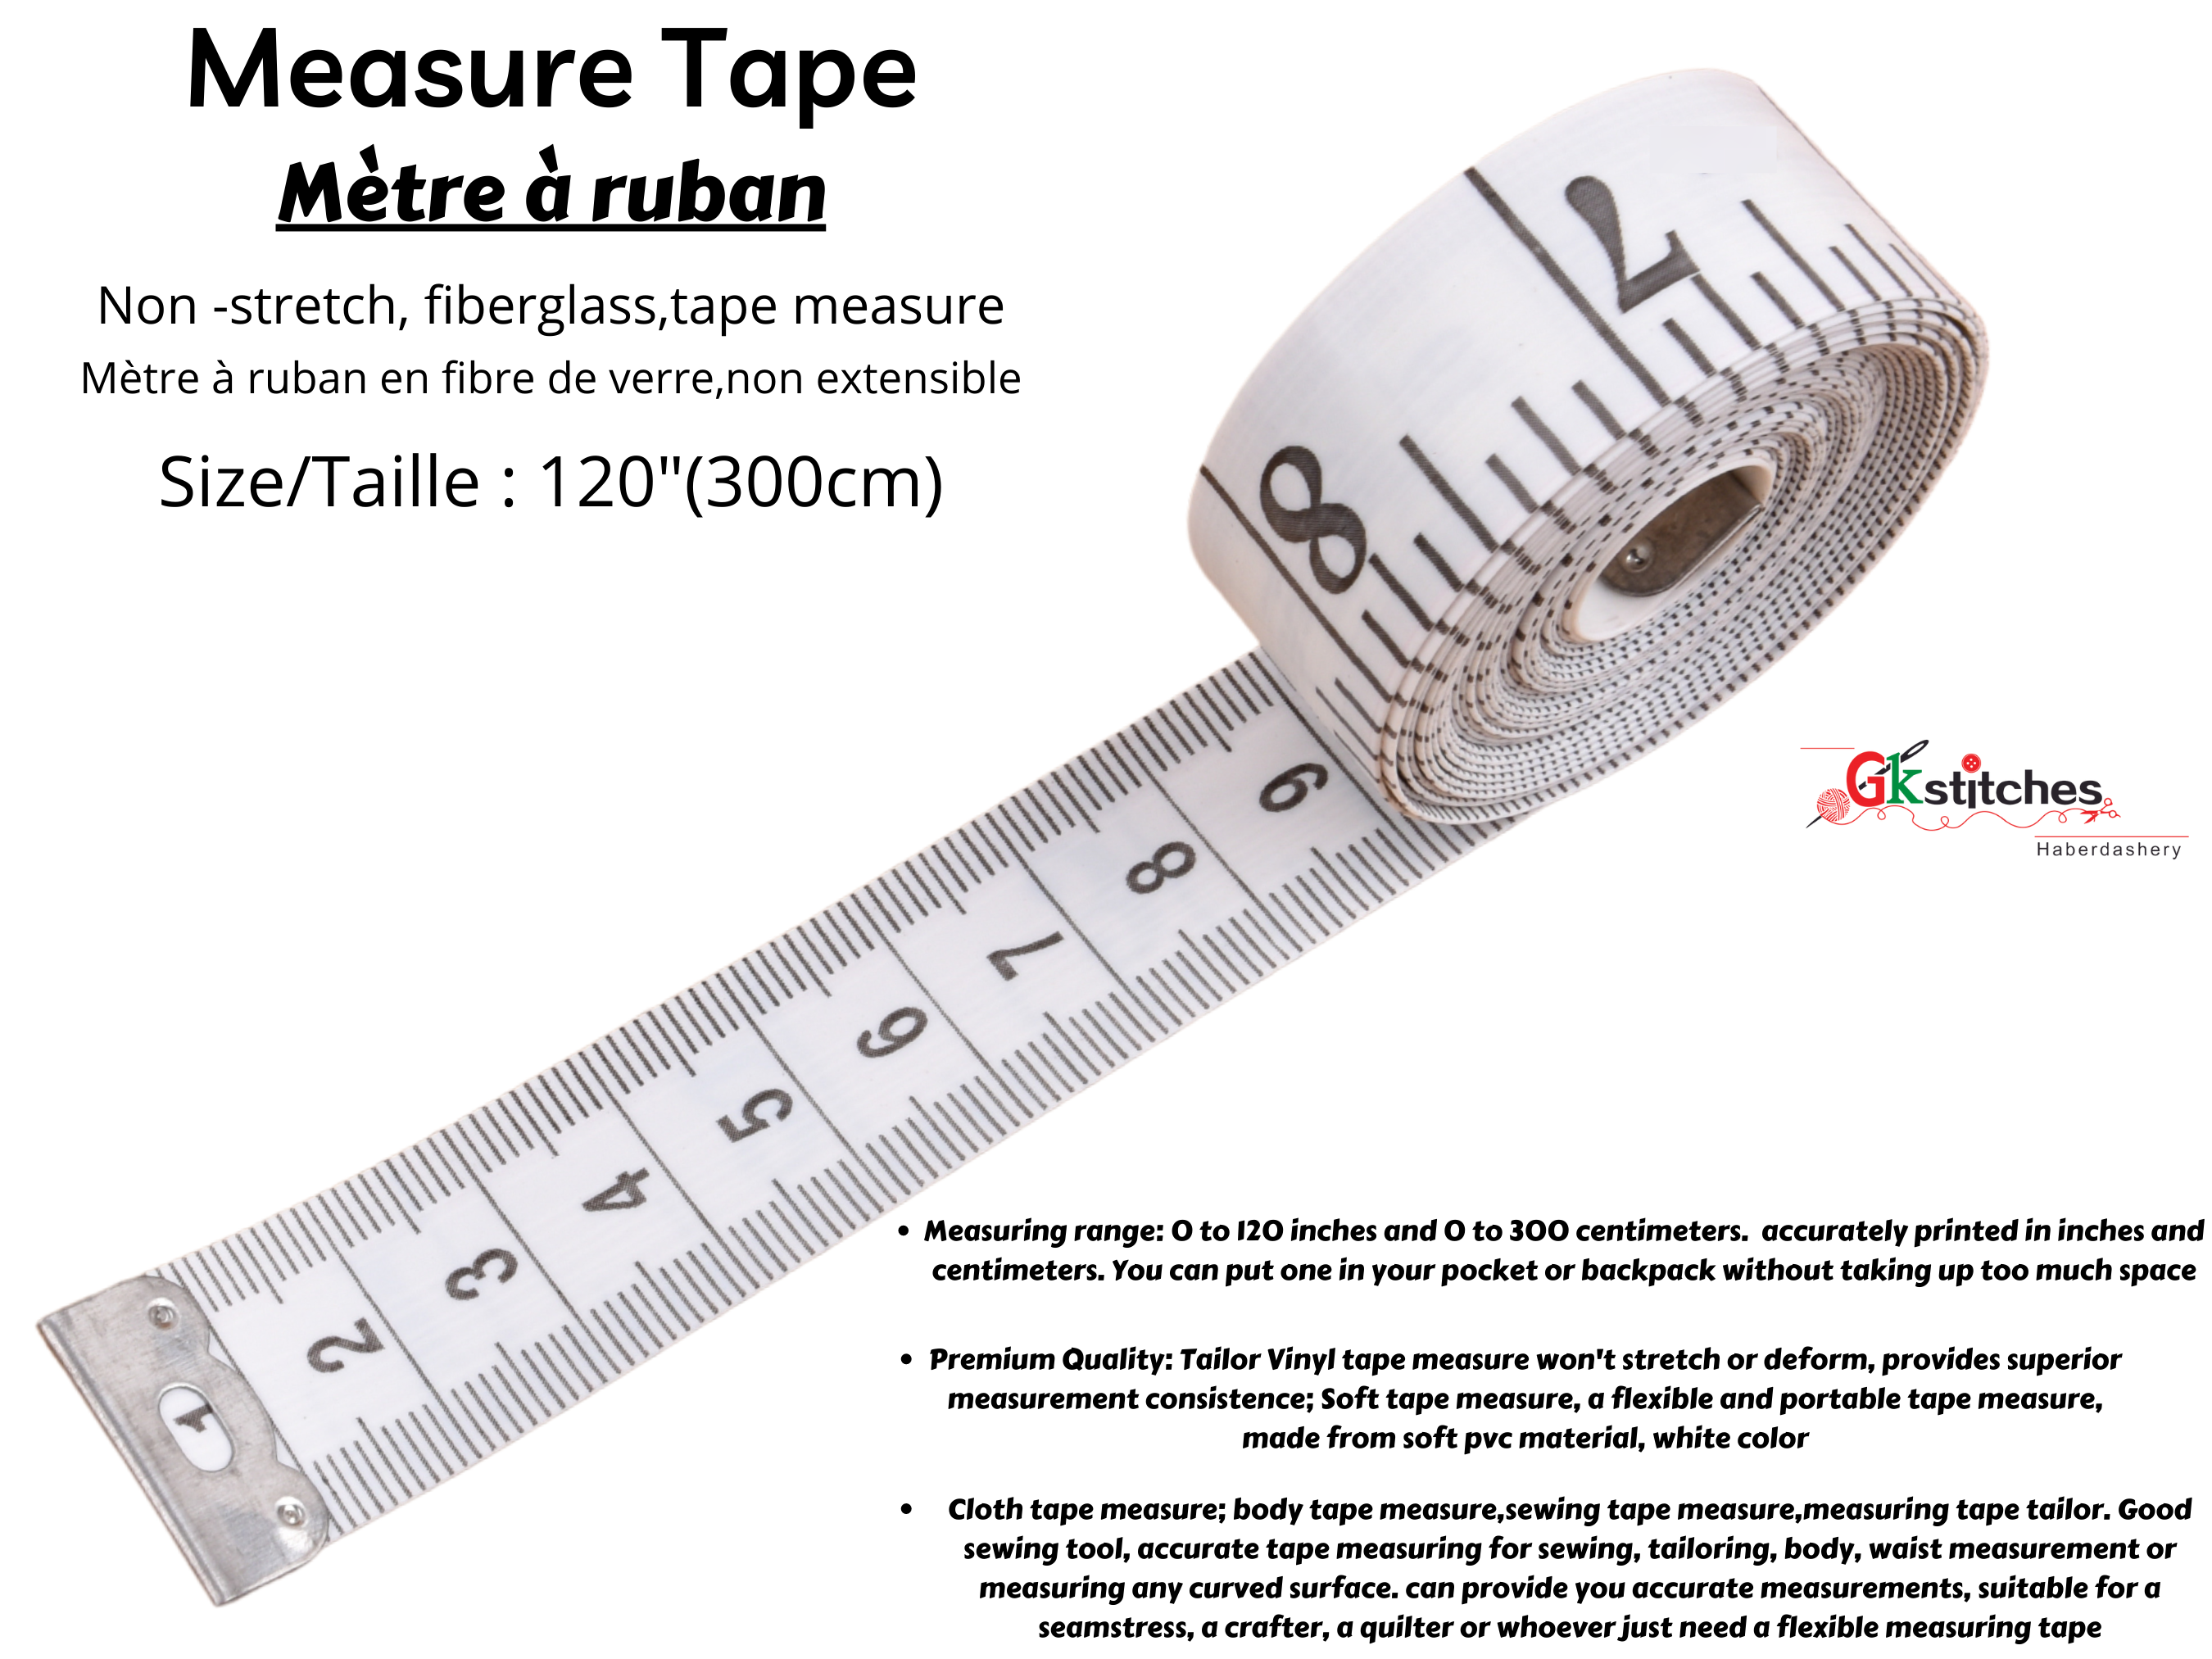 120 Retractable Tape Measure Bulk - Sullivans USA